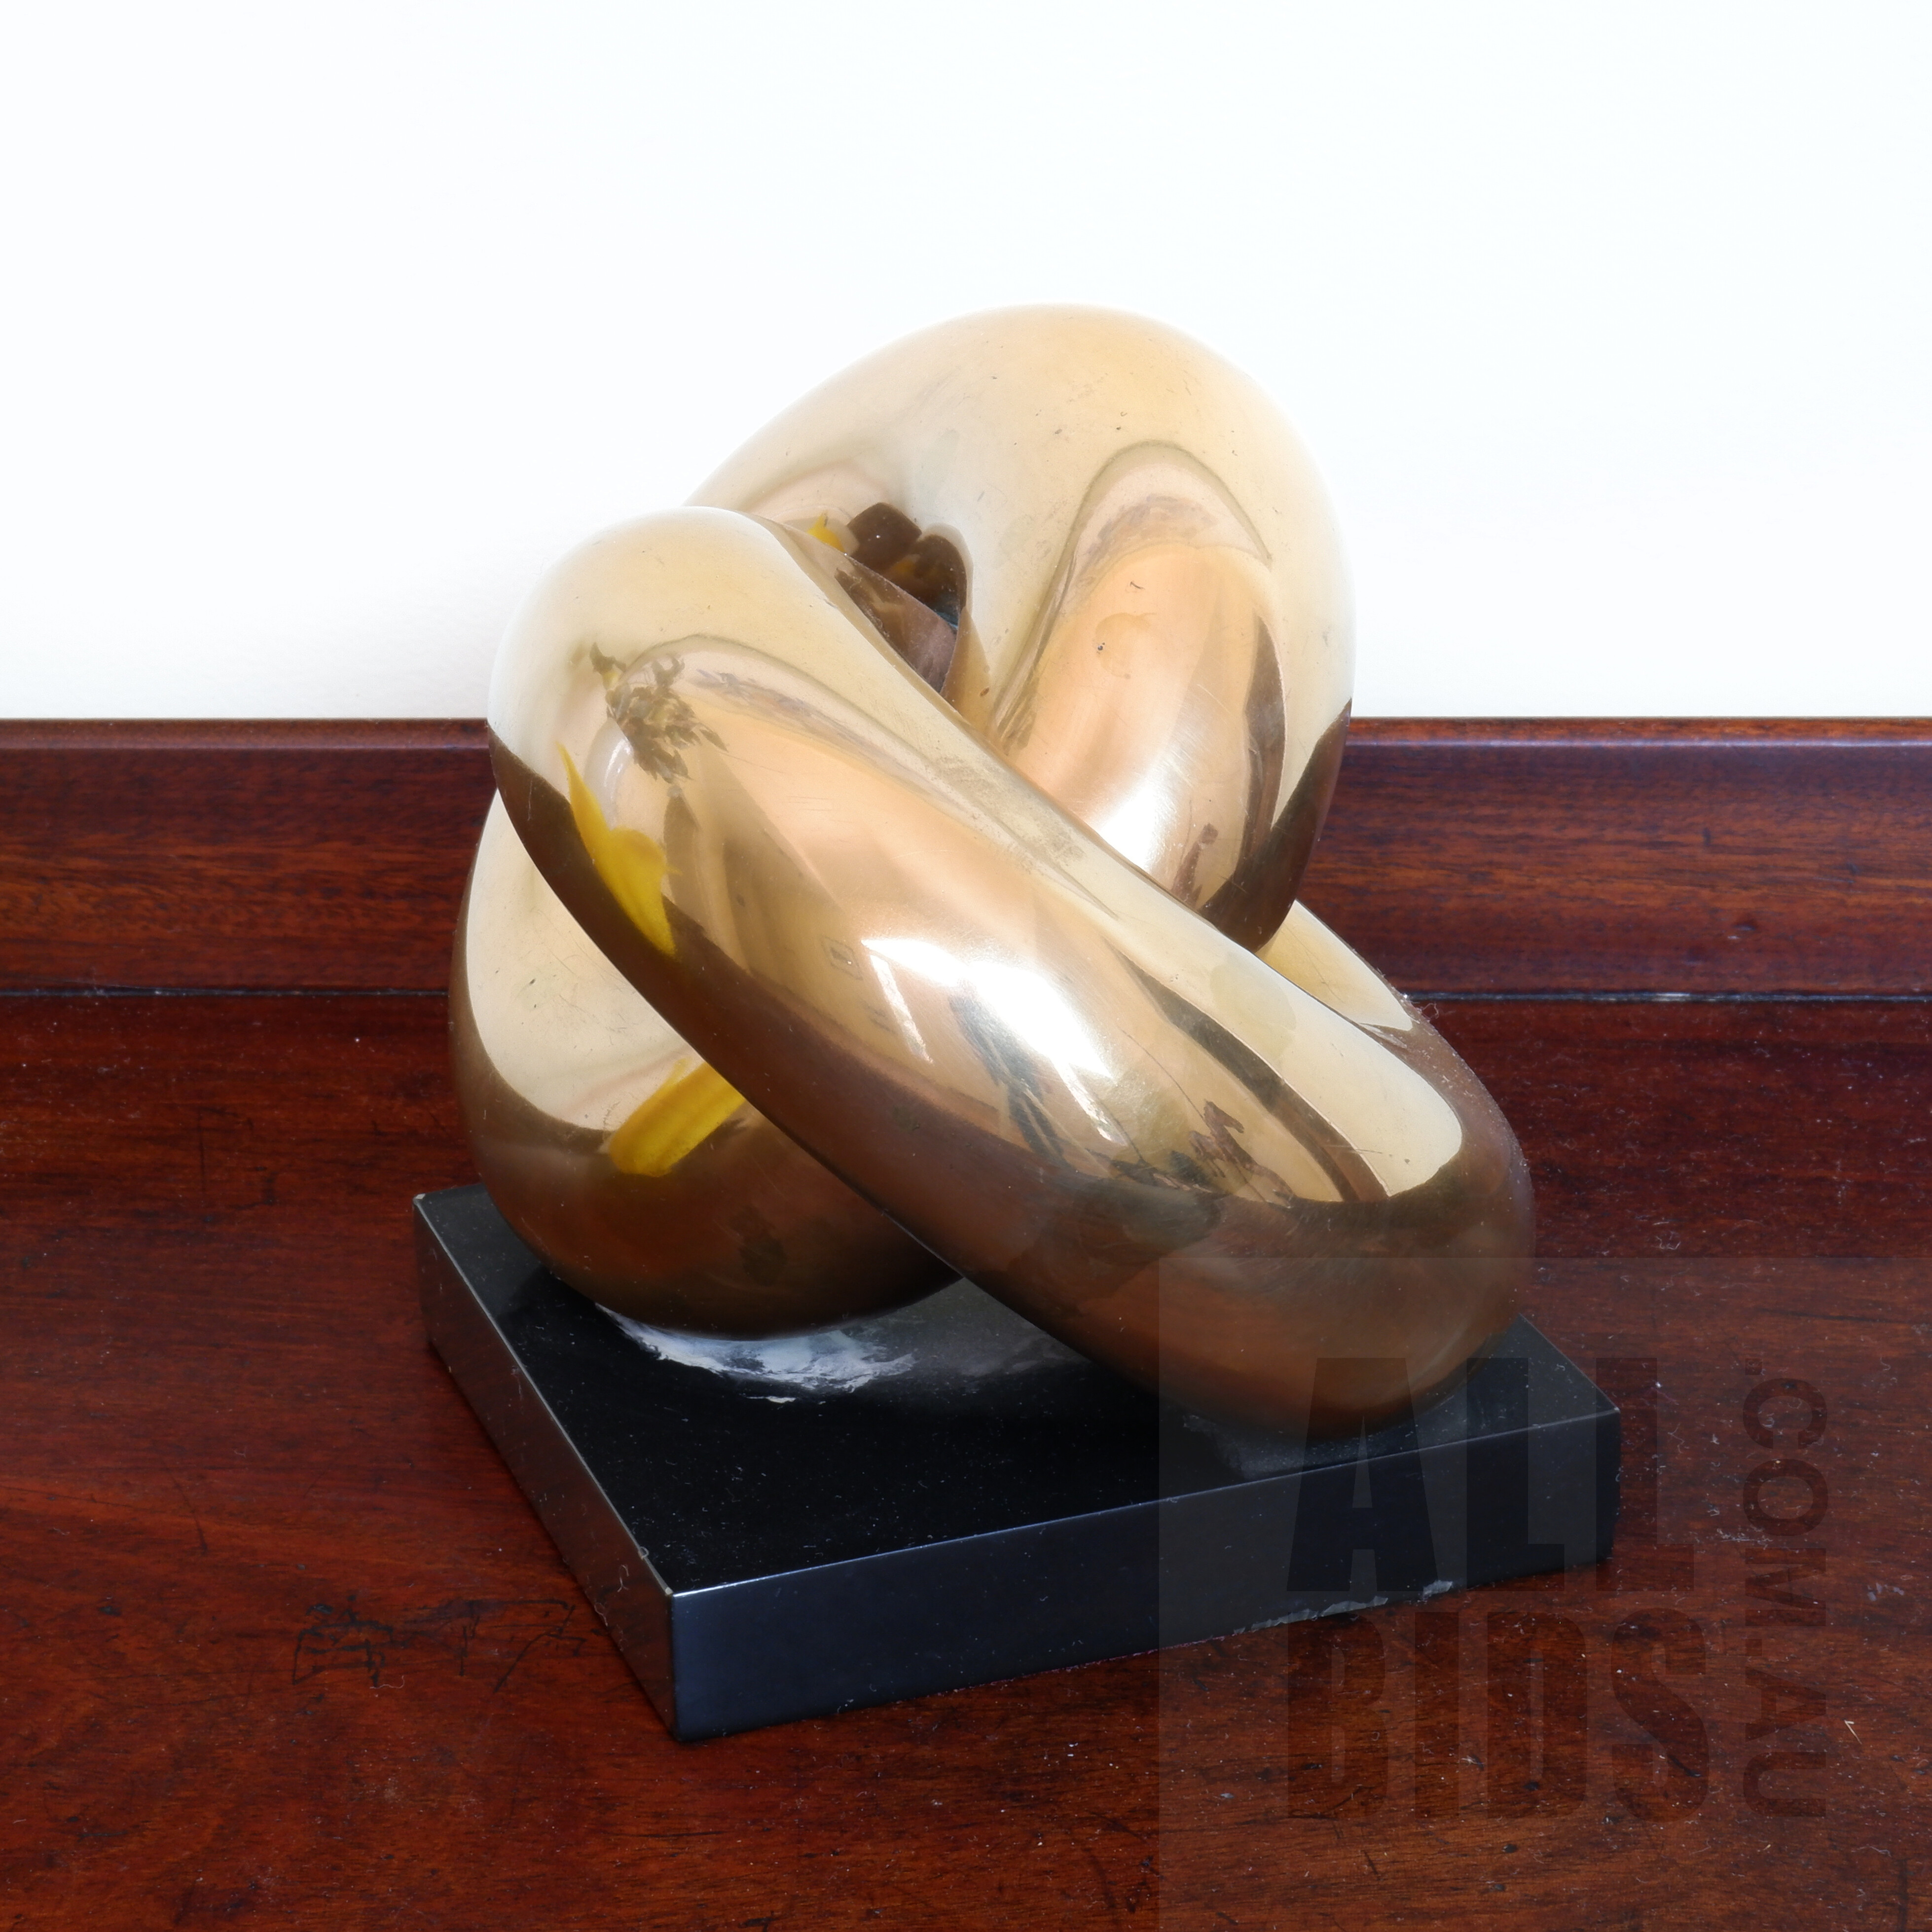 'John Robinson (Britain, Australia, 1929-2009) Bonds of Friendship 1980, Bronze Sculpture'